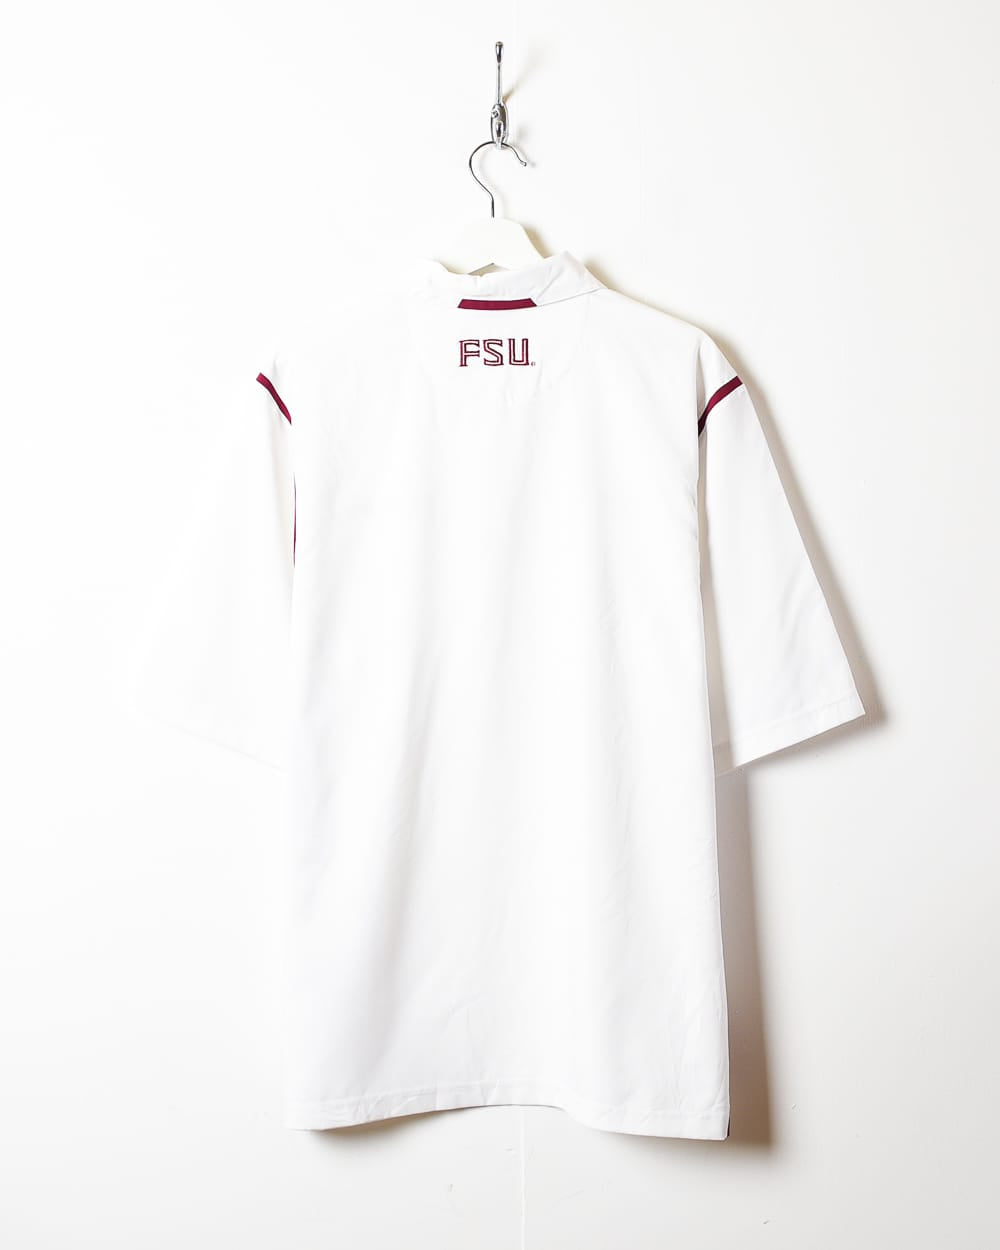 White Nike Team Florida State Polo Shirt - Medium